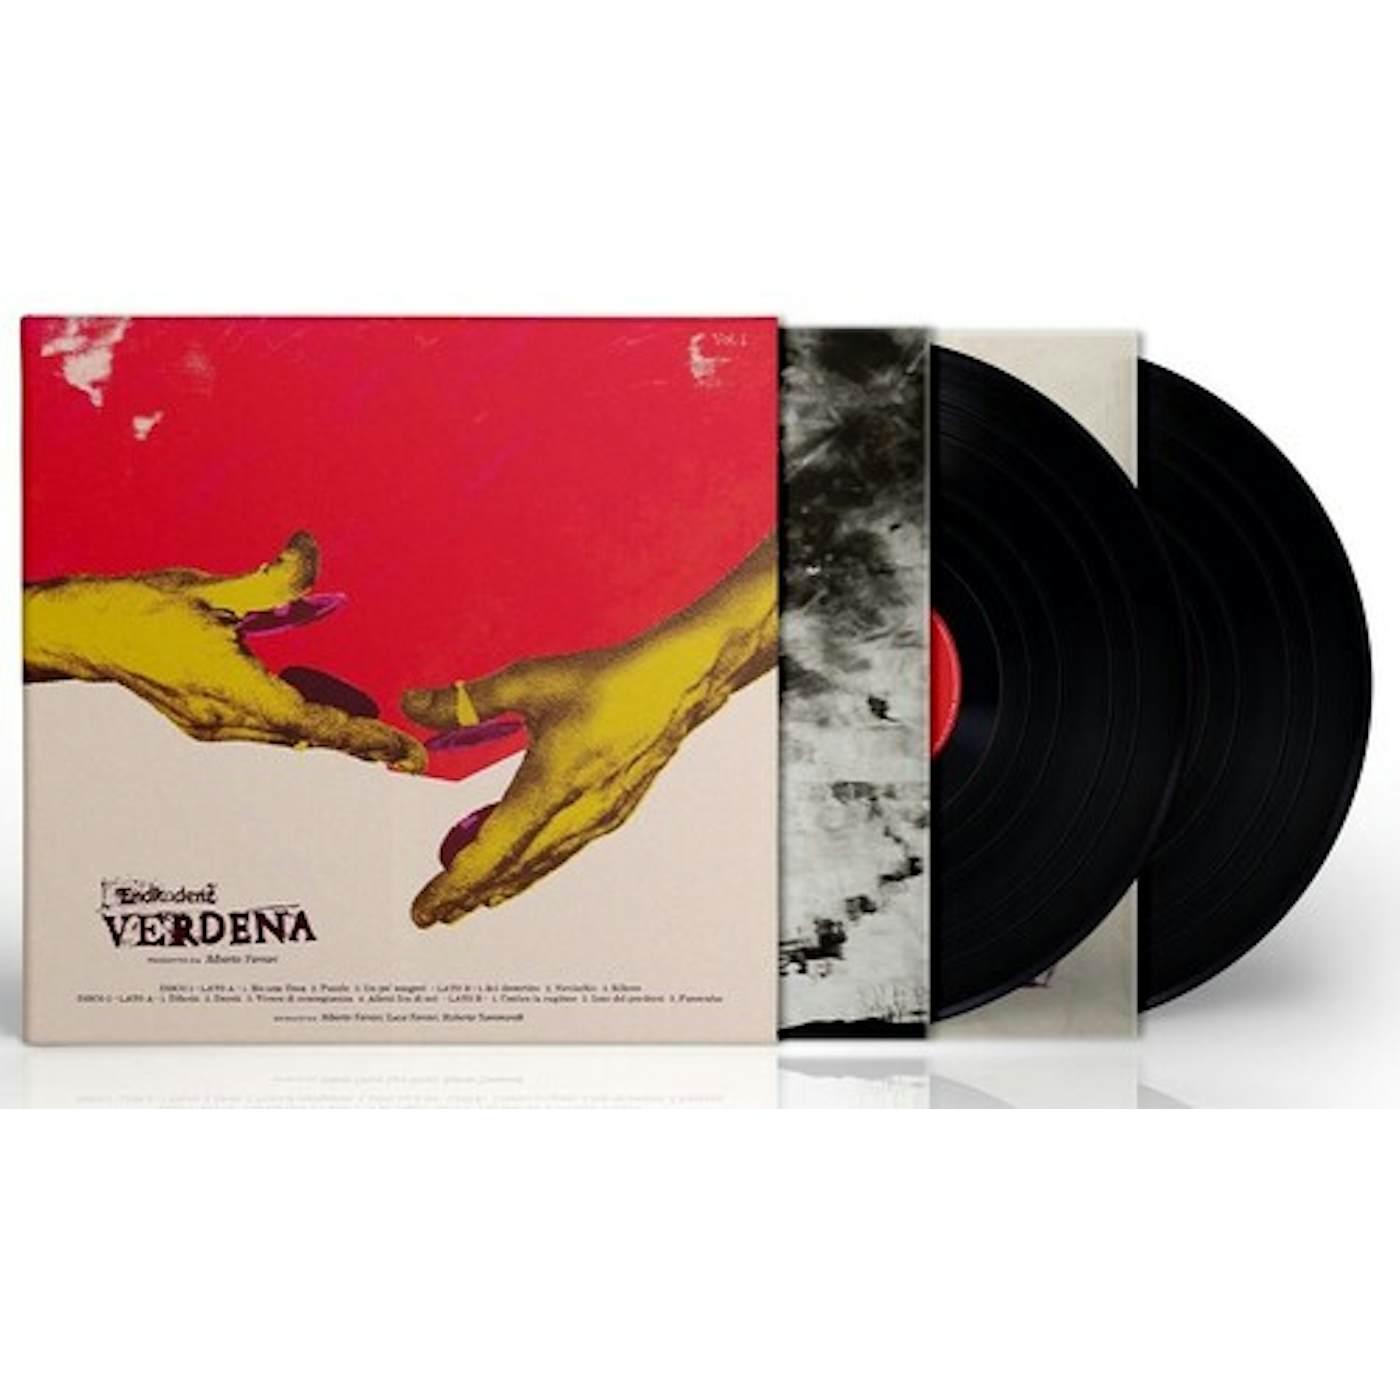 Verdena ENDKADENZ VOL 1 Vinyl Record